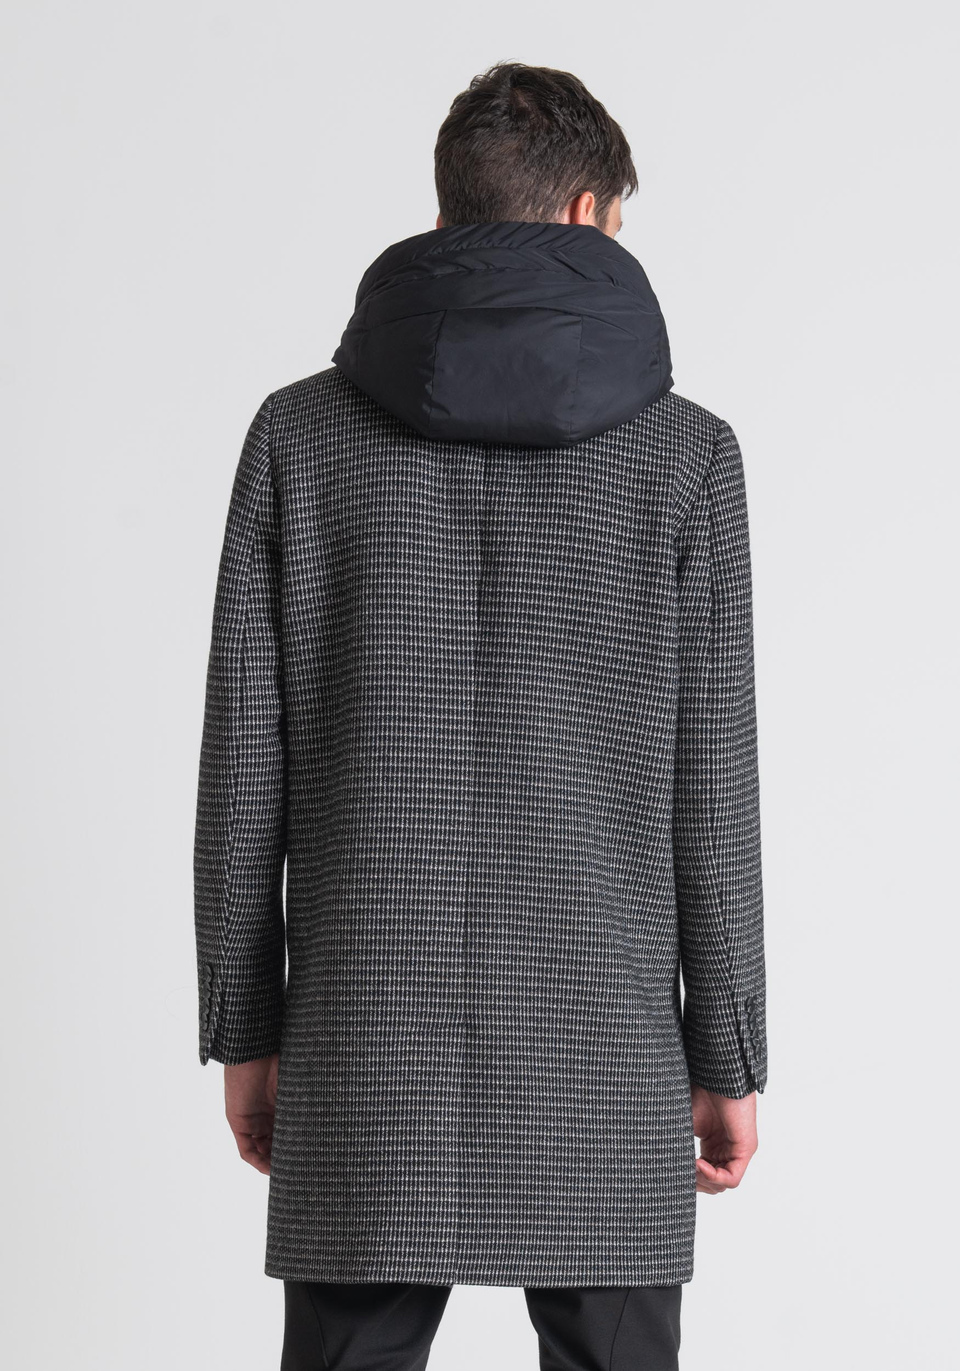 "NATHAN" SLIM FIT COAT IN WOOL-BLEND FABRIC - Antony Morato Online Shop